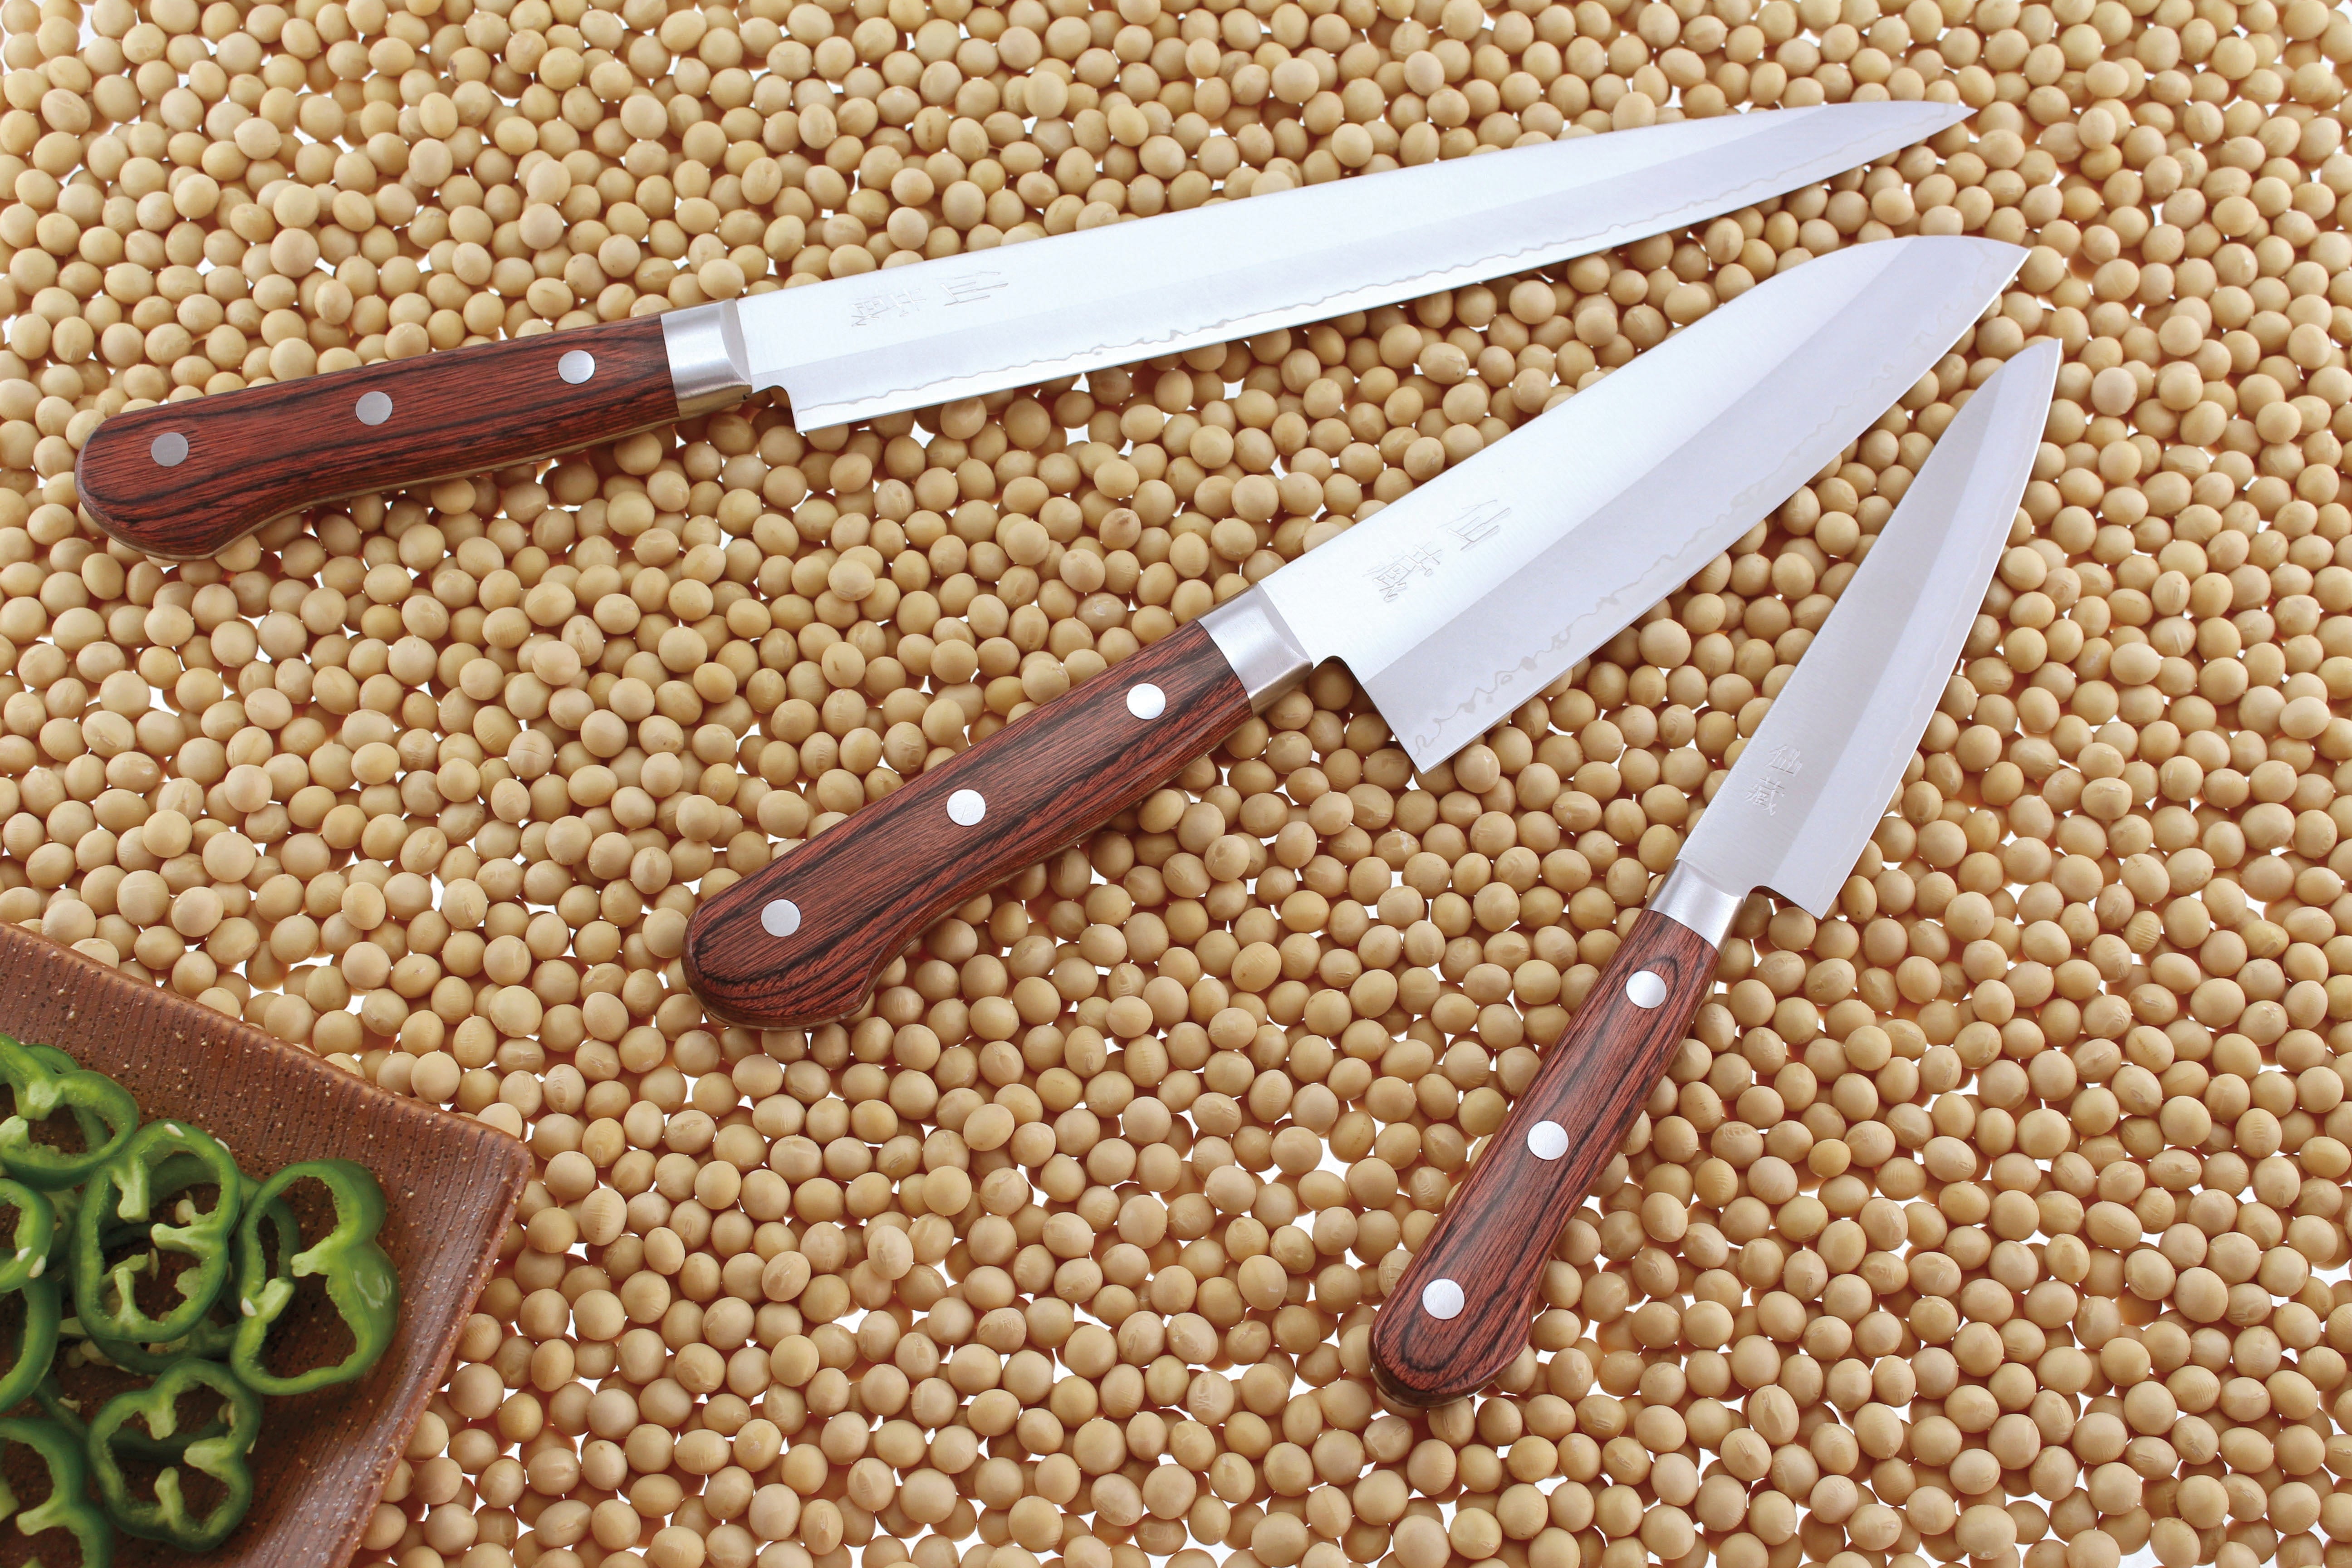 Senzo Clad AS-03 Chef Knife, 21 cm